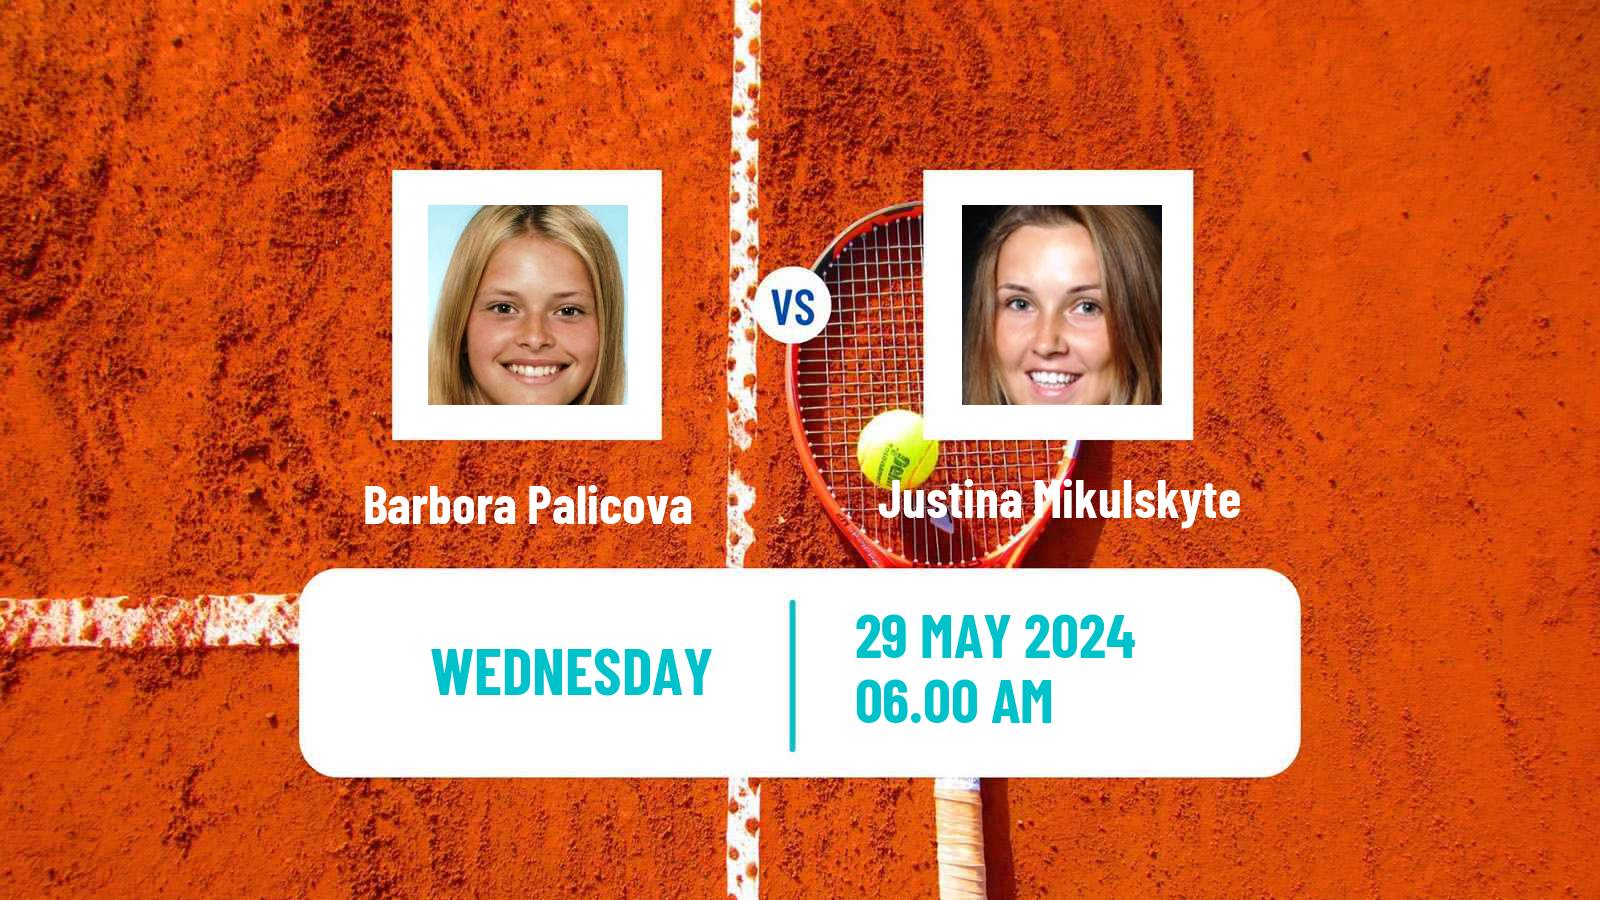 Tennis ITF W50 Otocec 2 Women Barbora Palicova - Justina Mikulskyte